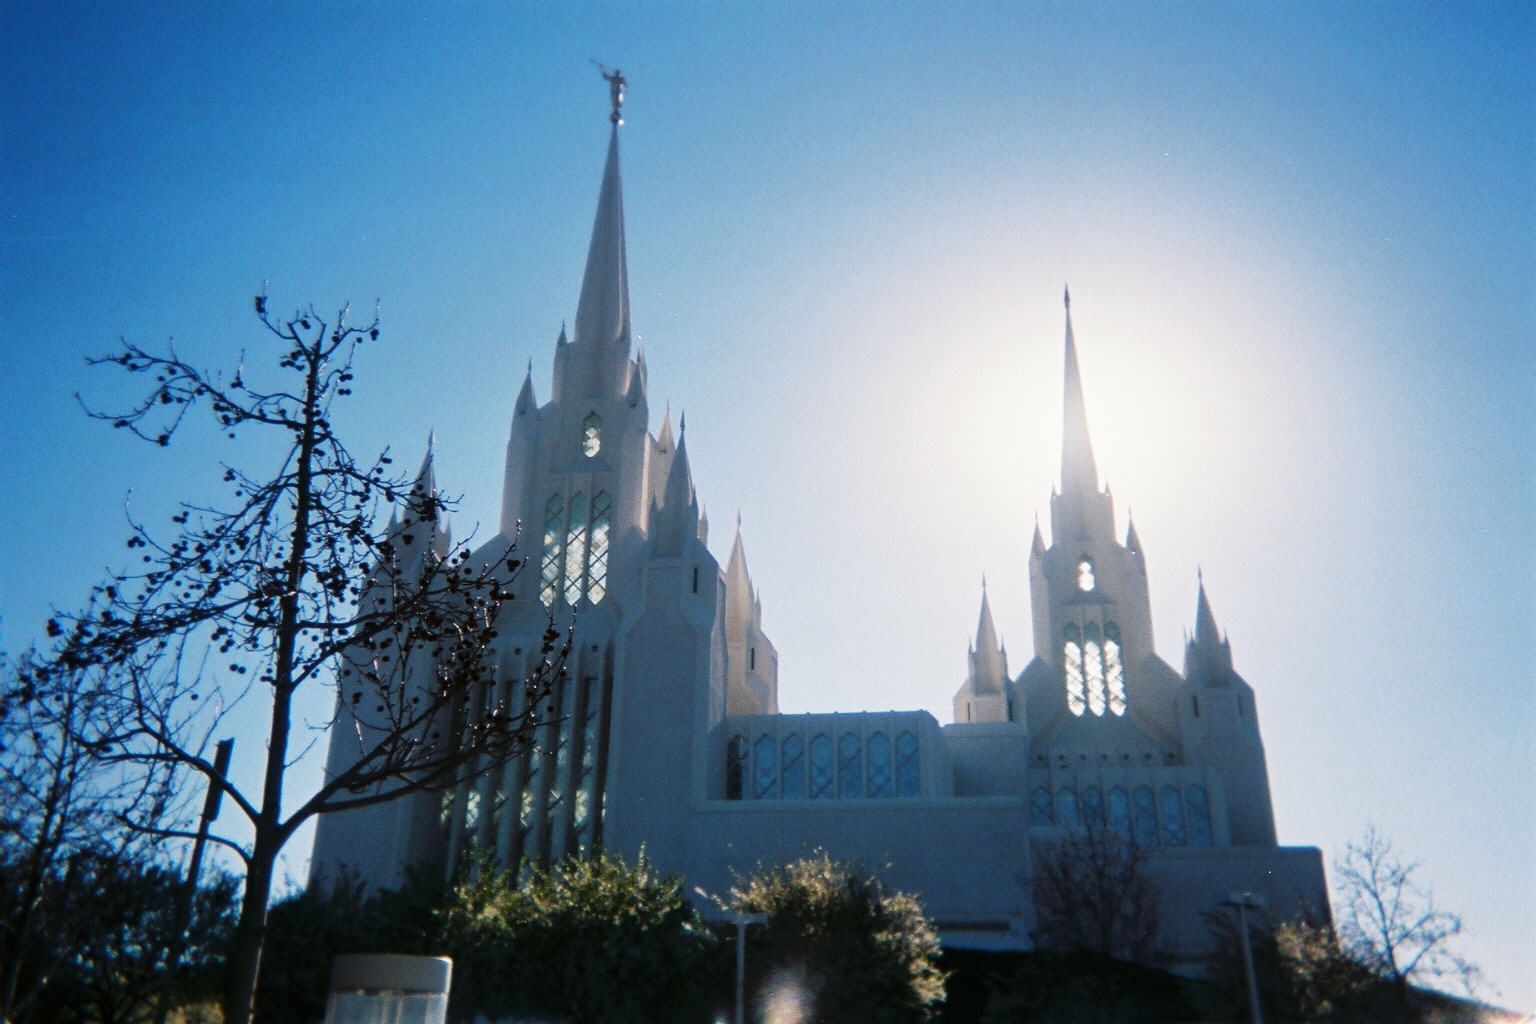 ca_feb_2004_sun_behind_mormon_temple.jpg